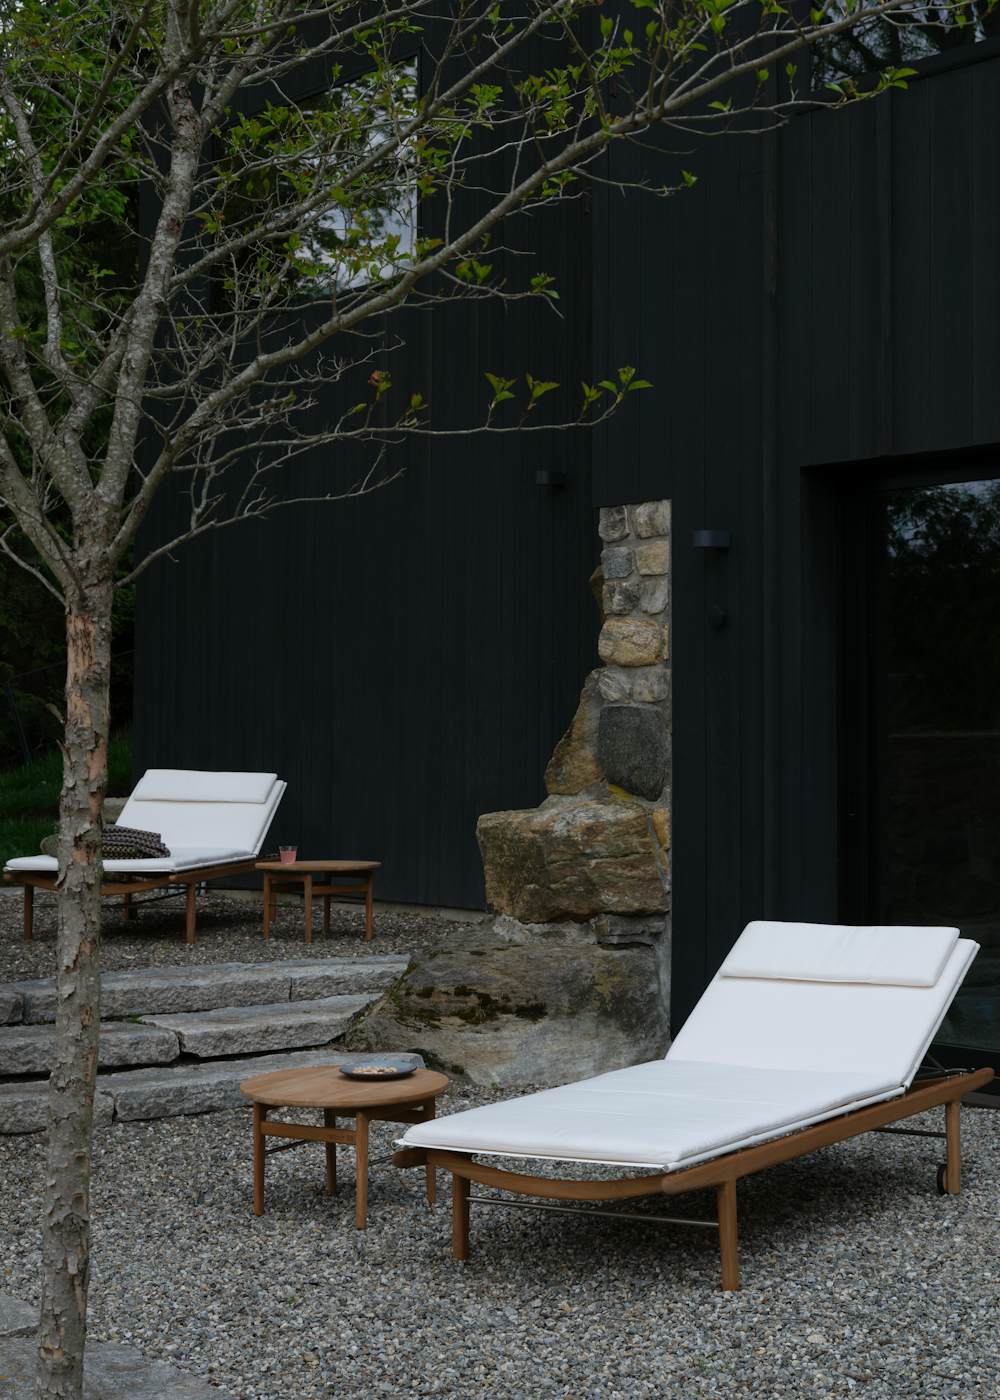 Finn Chaise Lounges in an outdoor courtyard setting